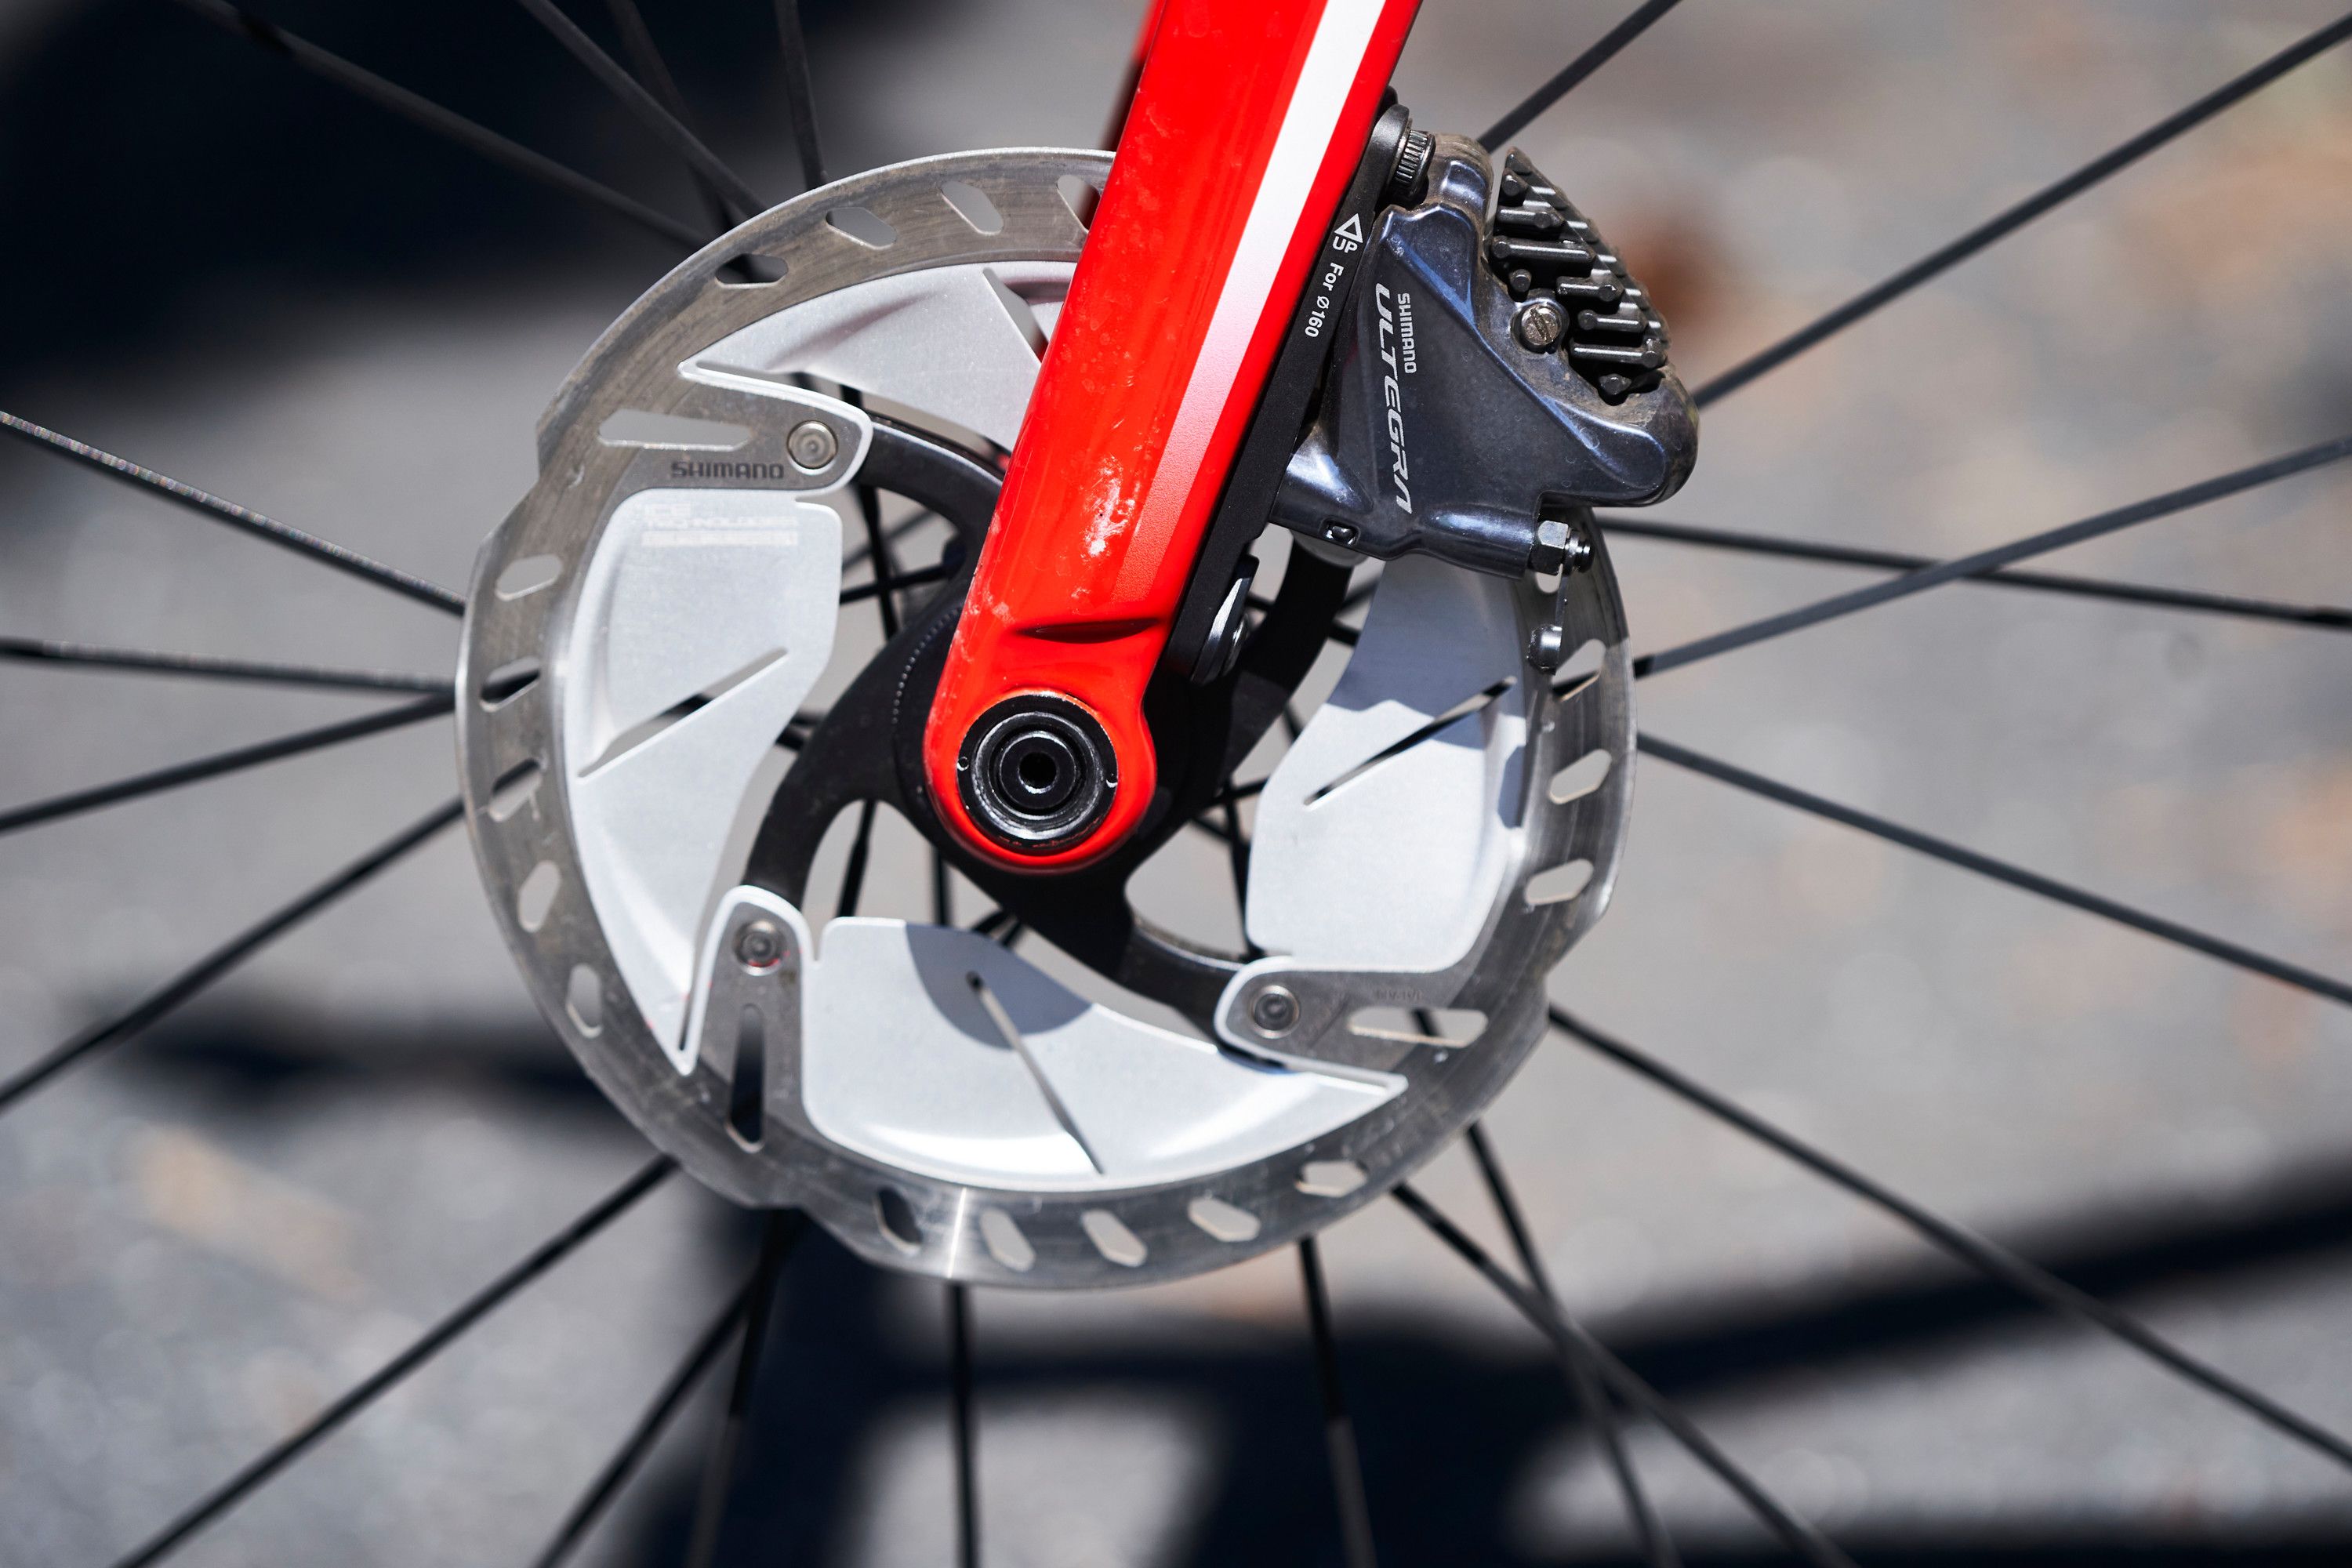 Disc Brake Cycle Gear Best Sale, 54% OFF | www.ingeniovirtual.com